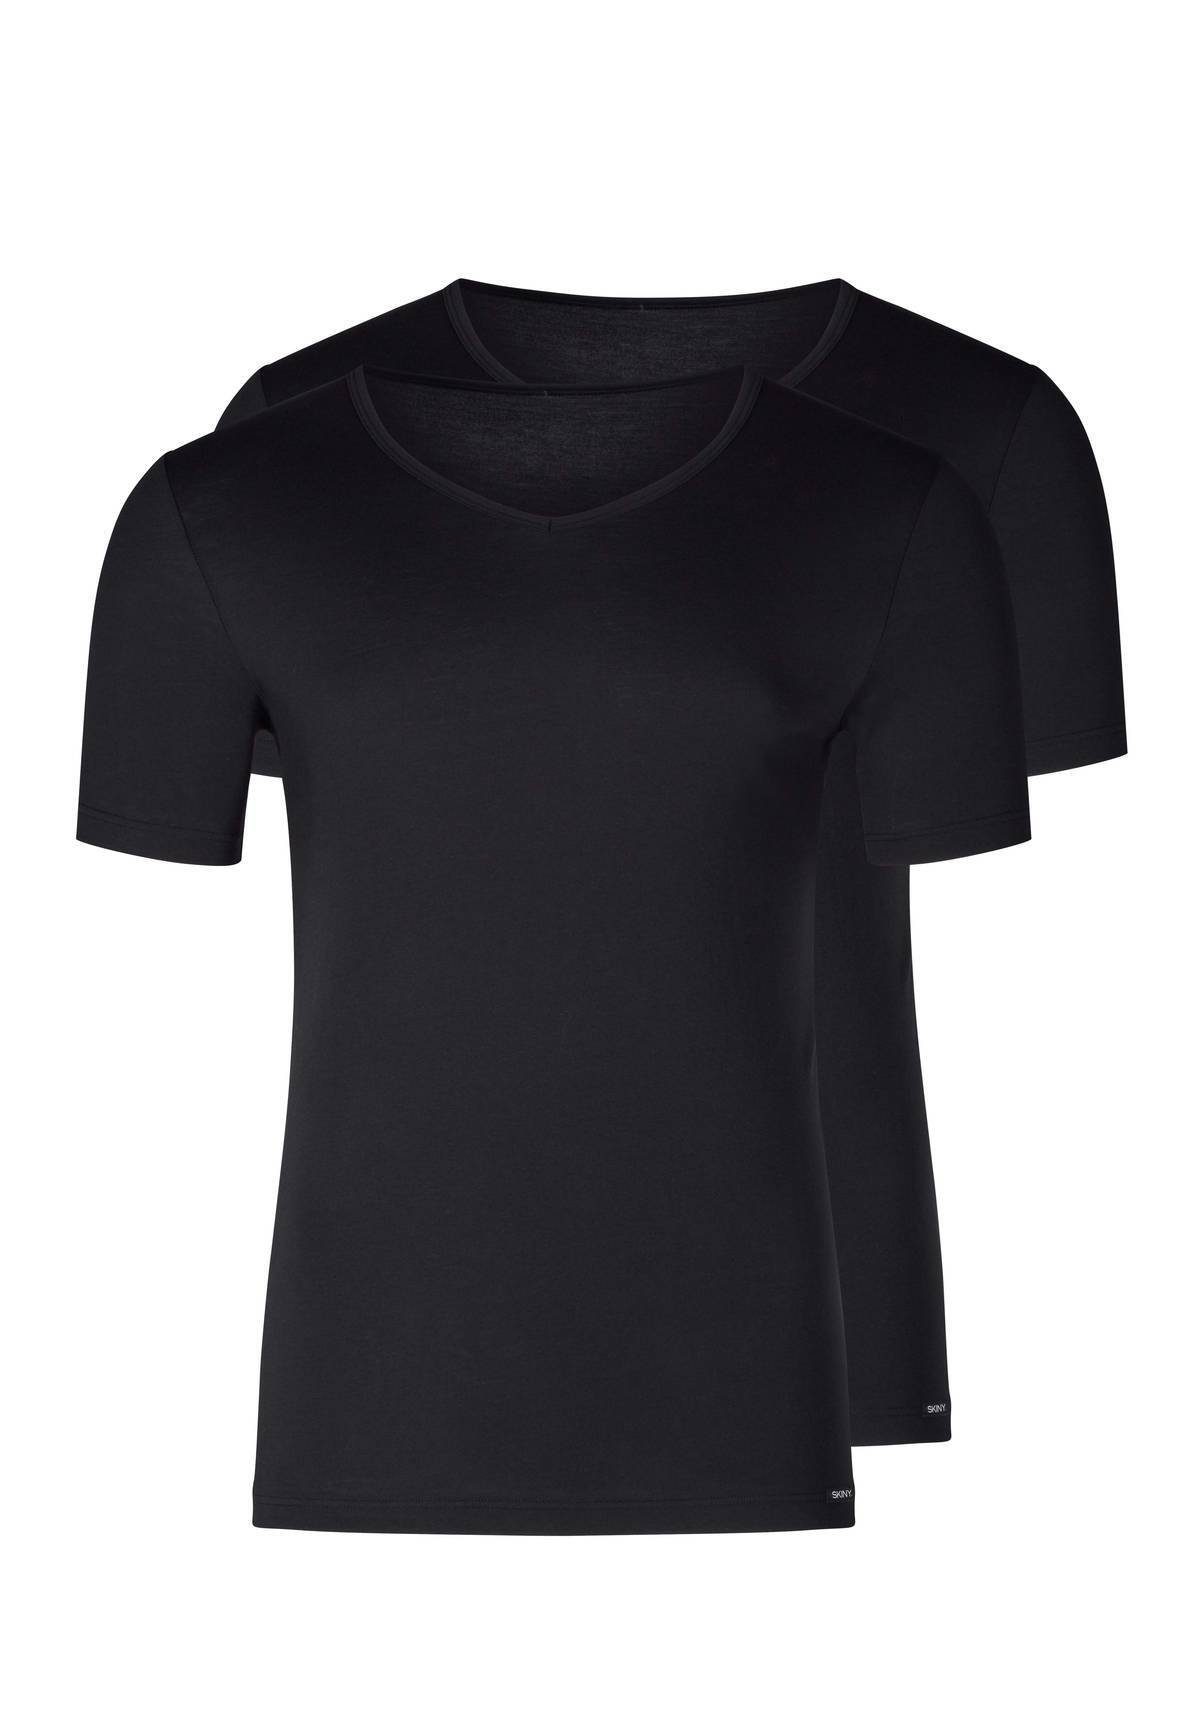 Halbarm - Unterhemd, T-Shirt, Skiny Schwarz Herren Unterhemd Pack 2er